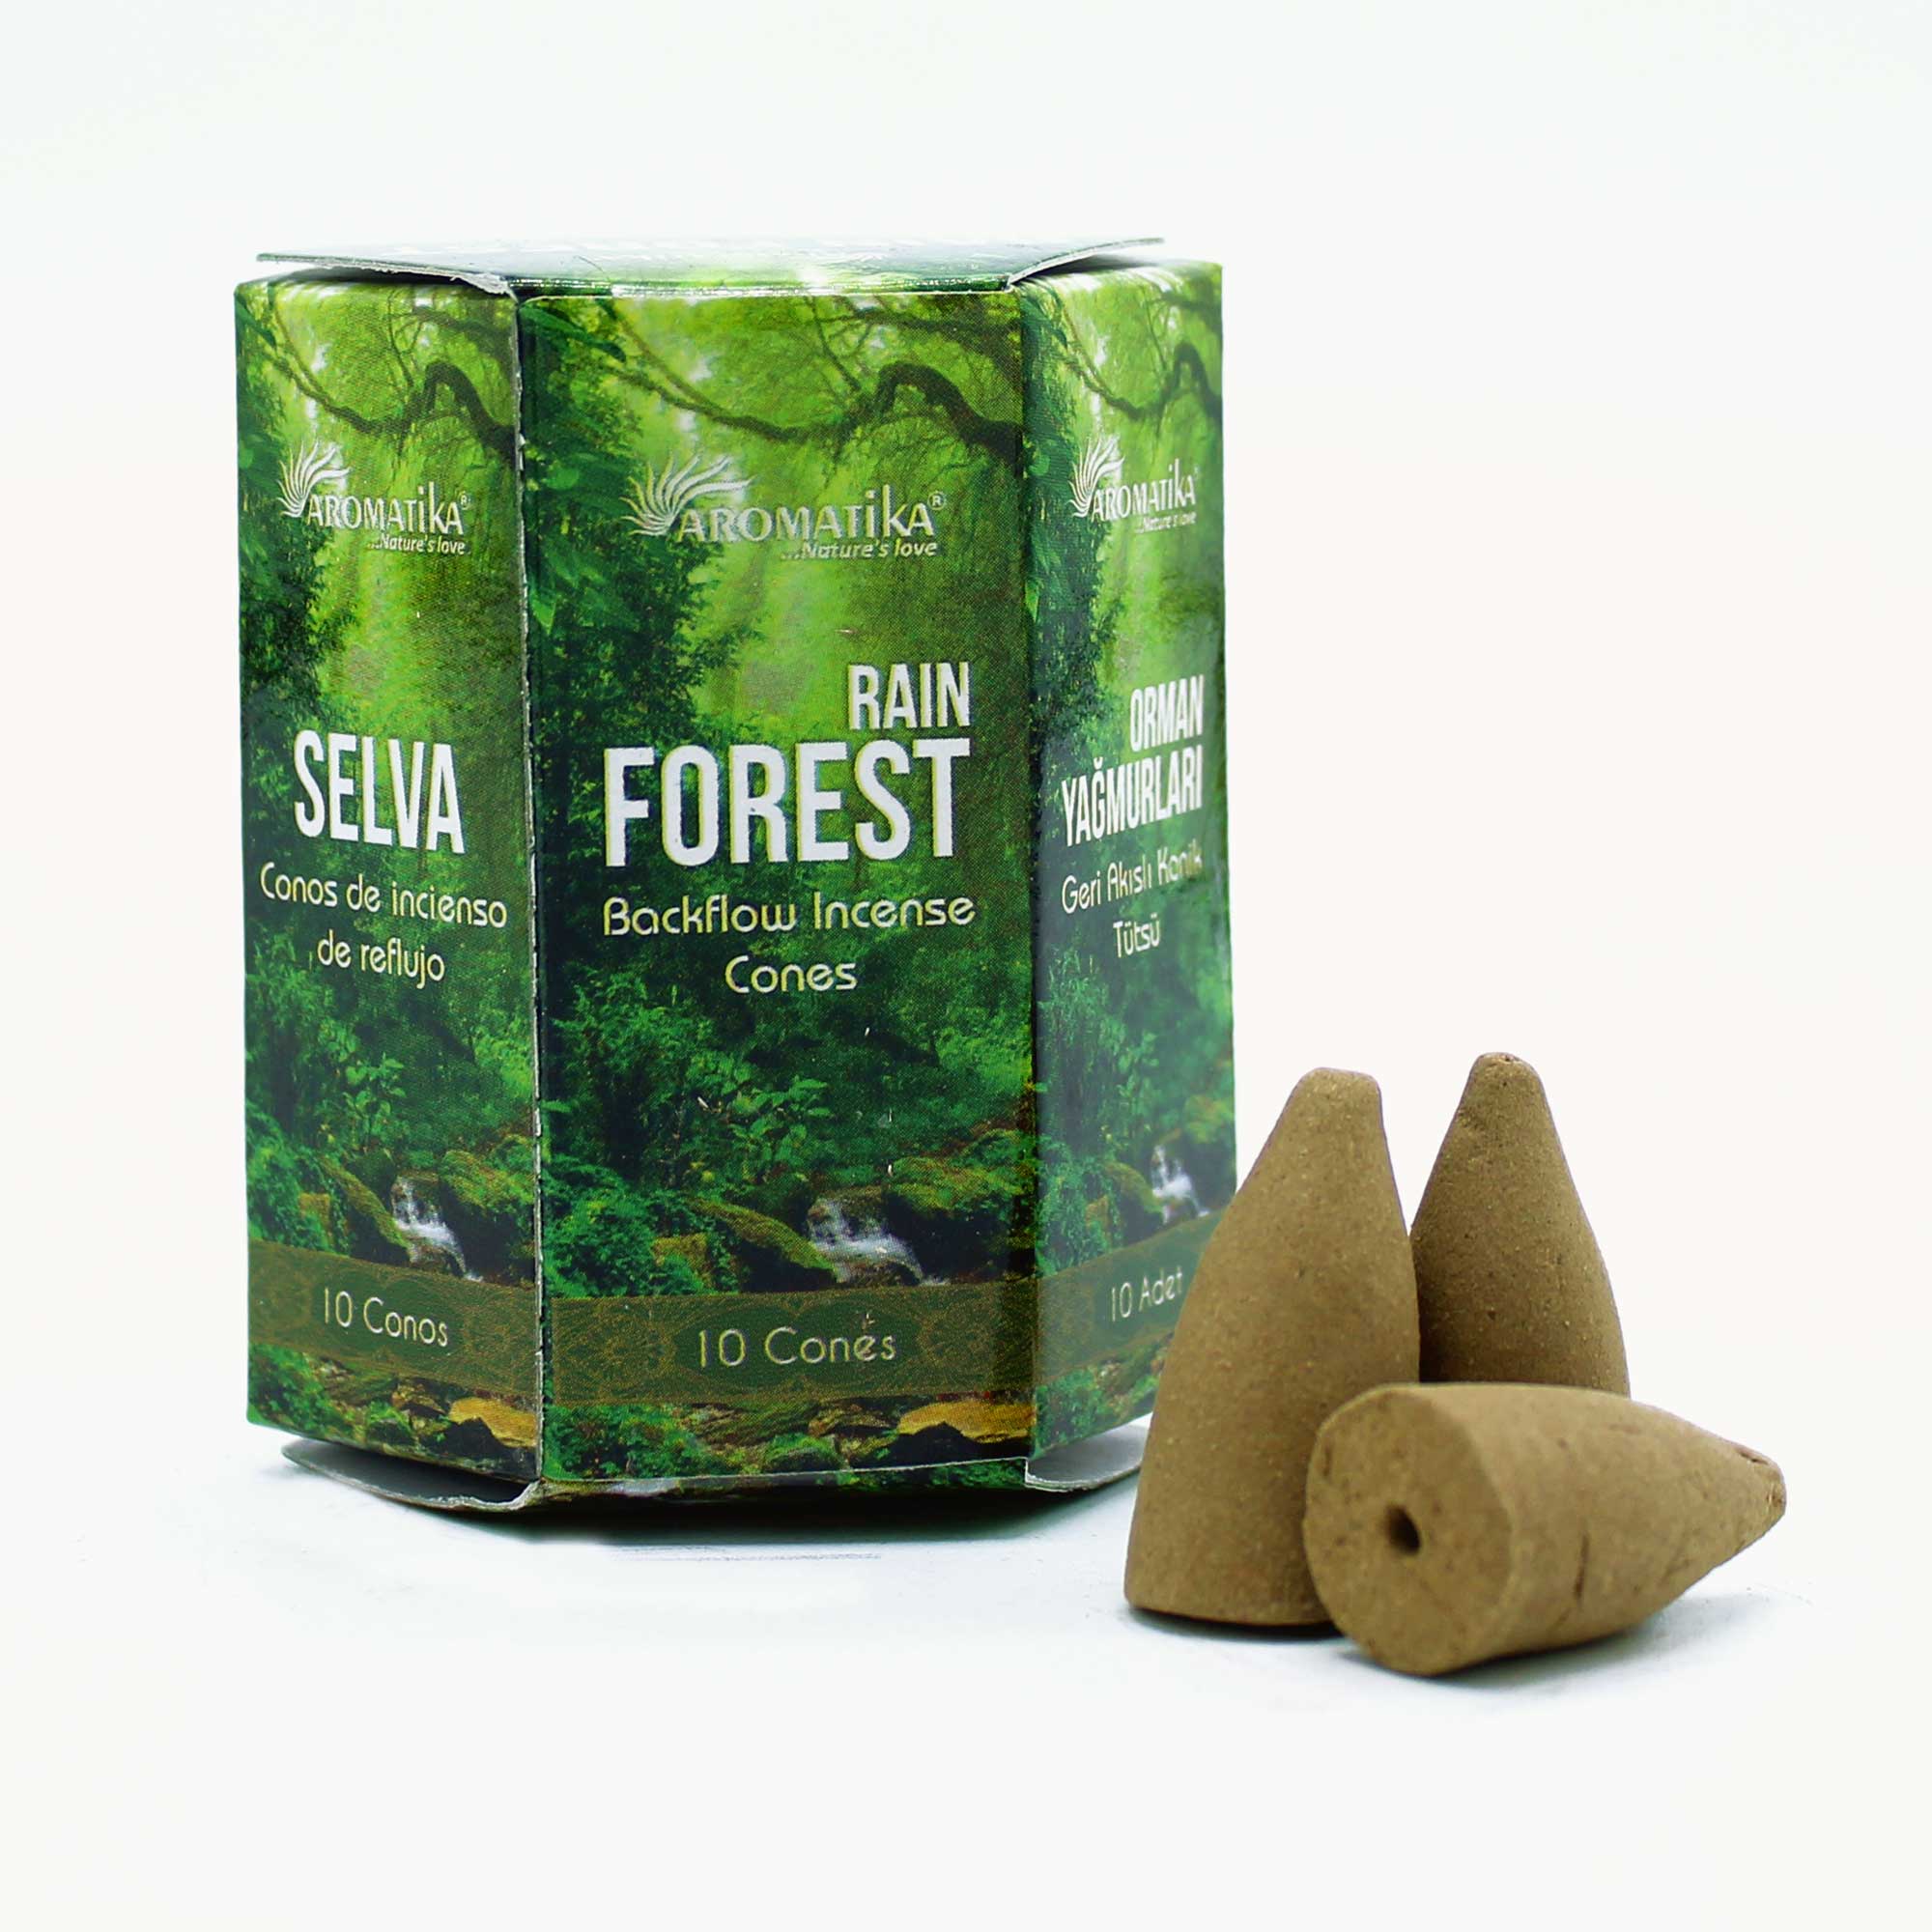 Aromatica Backflow Incense Cones - Rain Forest Scent